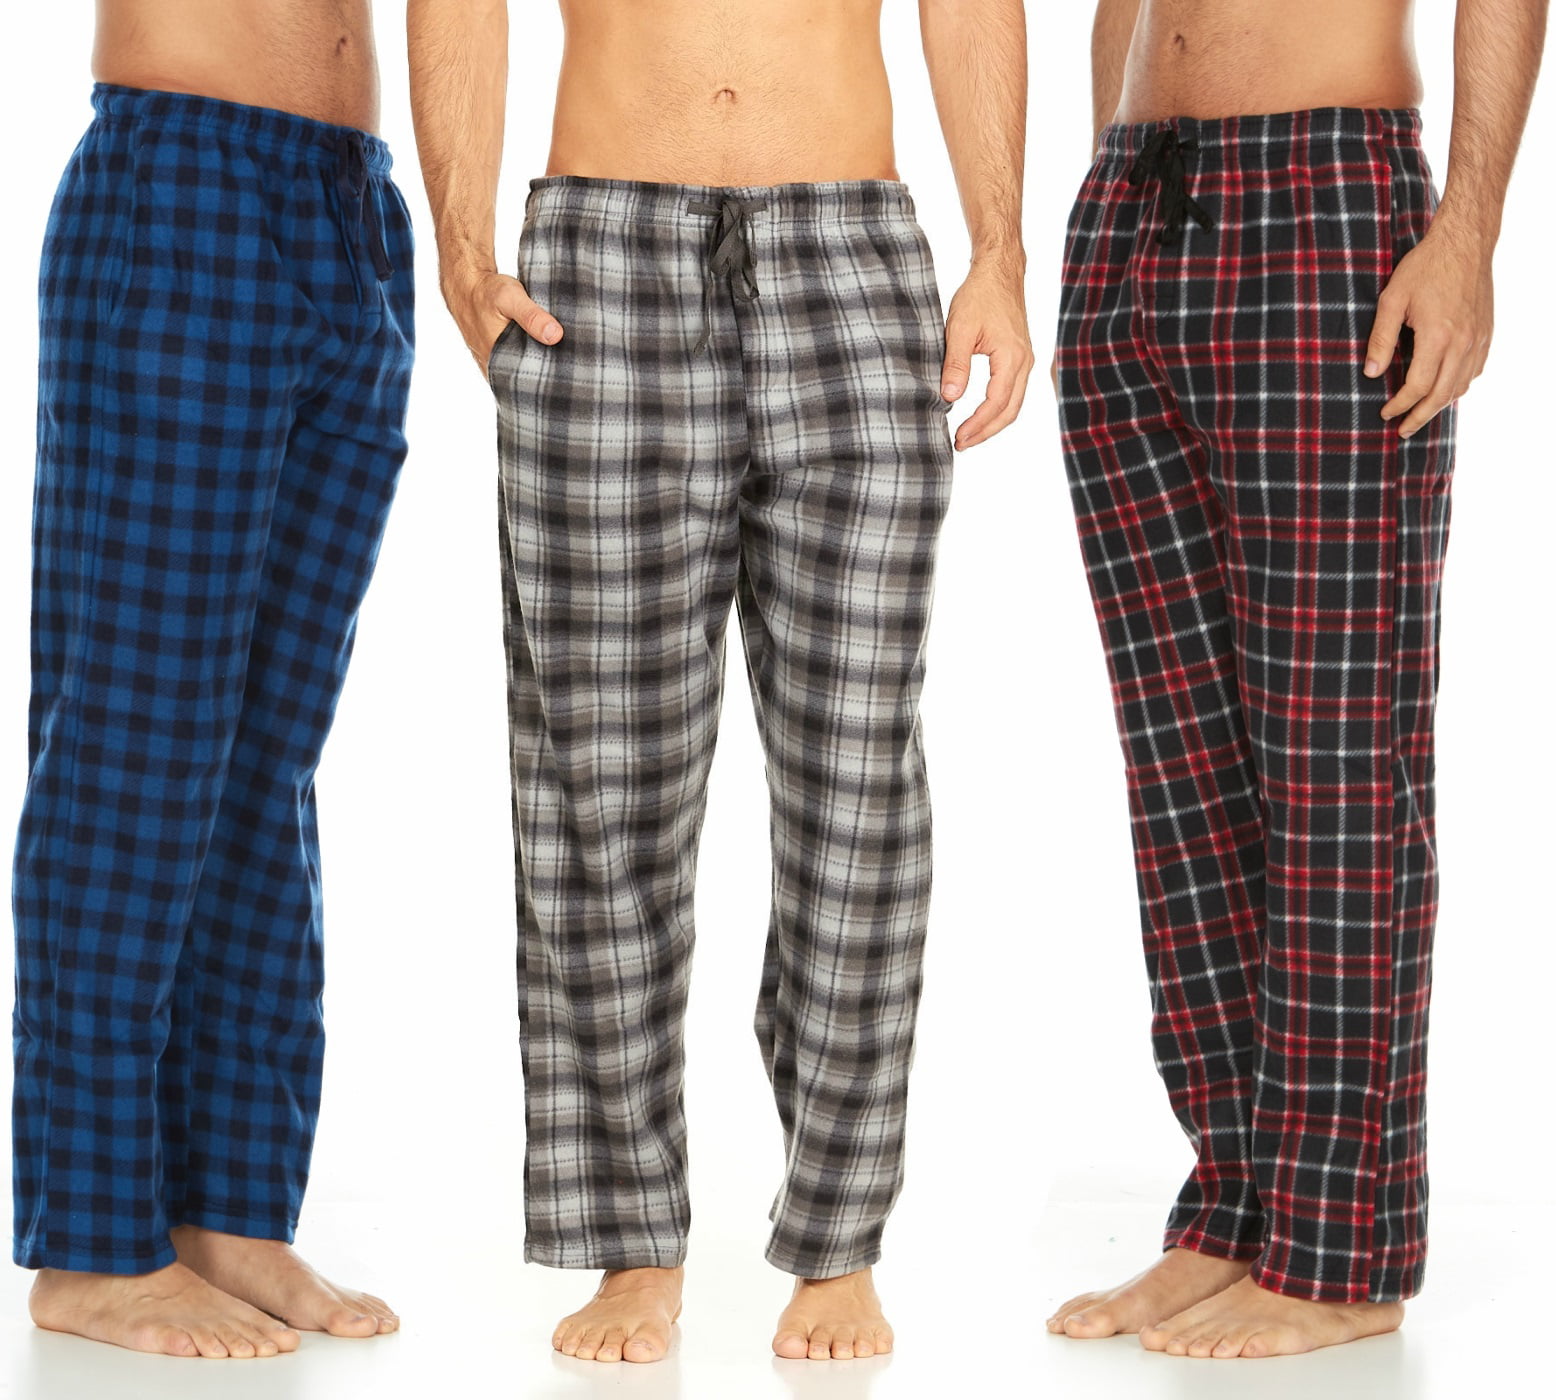 Mens Pajama Pants Fleece Soft Plaid Casual Lounge Sleep Bottoms with Pockets